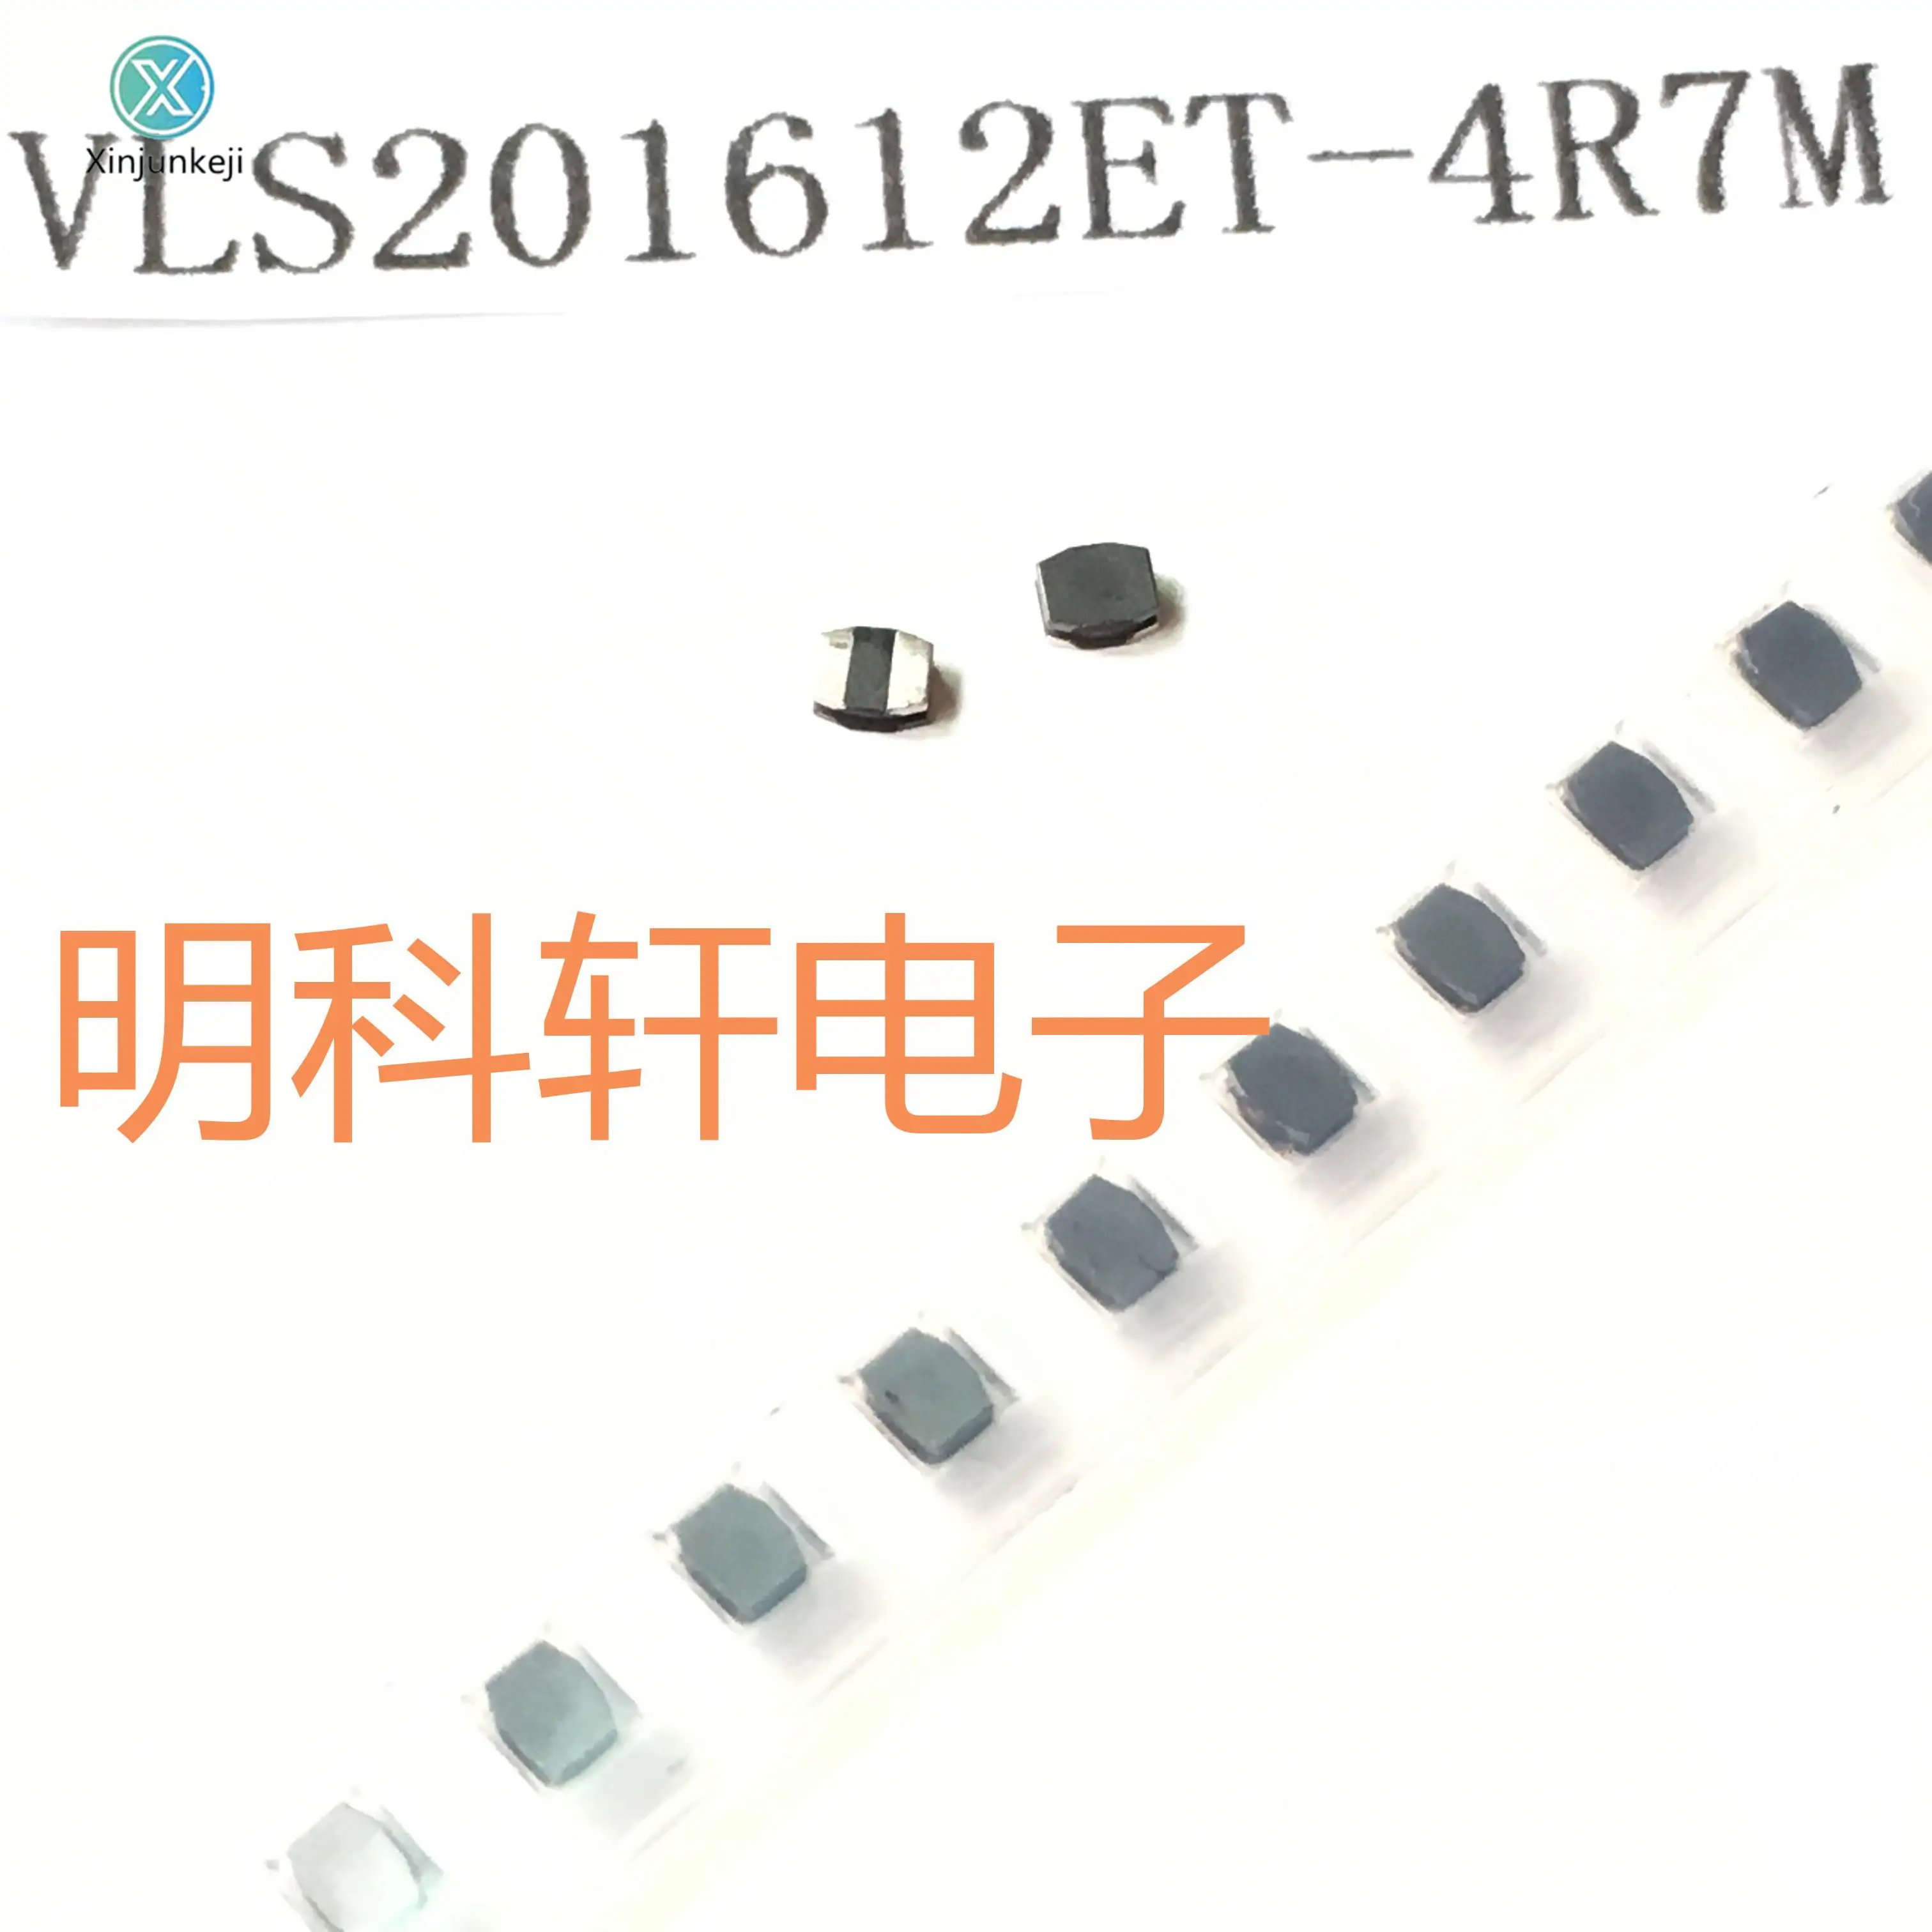 

30pcs orginal new VLS201612ET-4R7M SMD power inductor 4.7UH 2.0*1.6*1.2